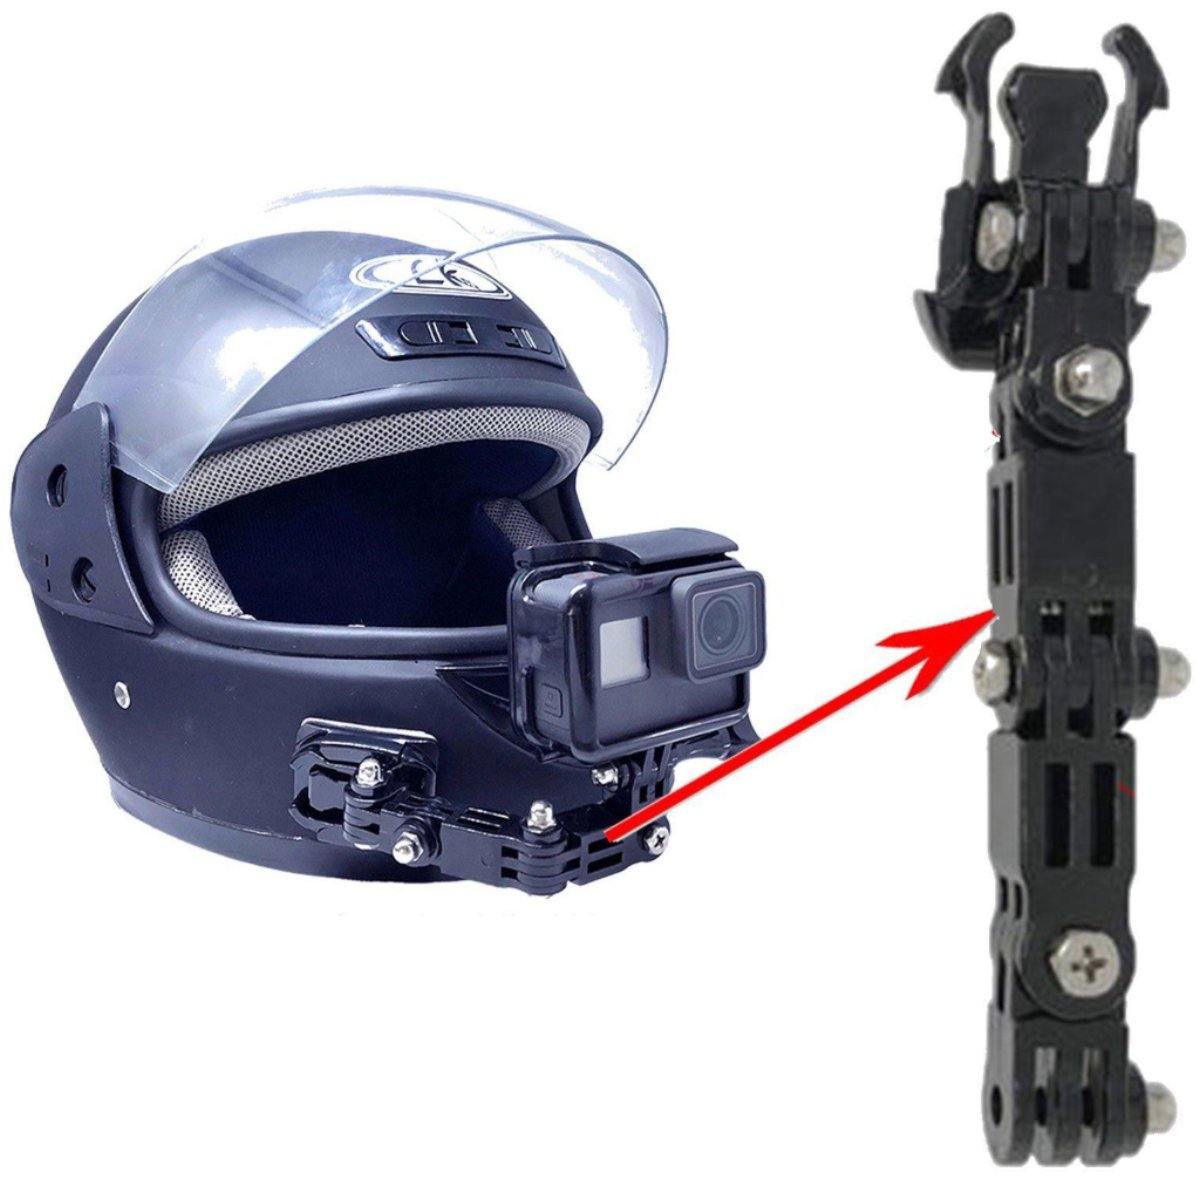 Helmet Chin Mount for Action Cameras - American Legend Rider